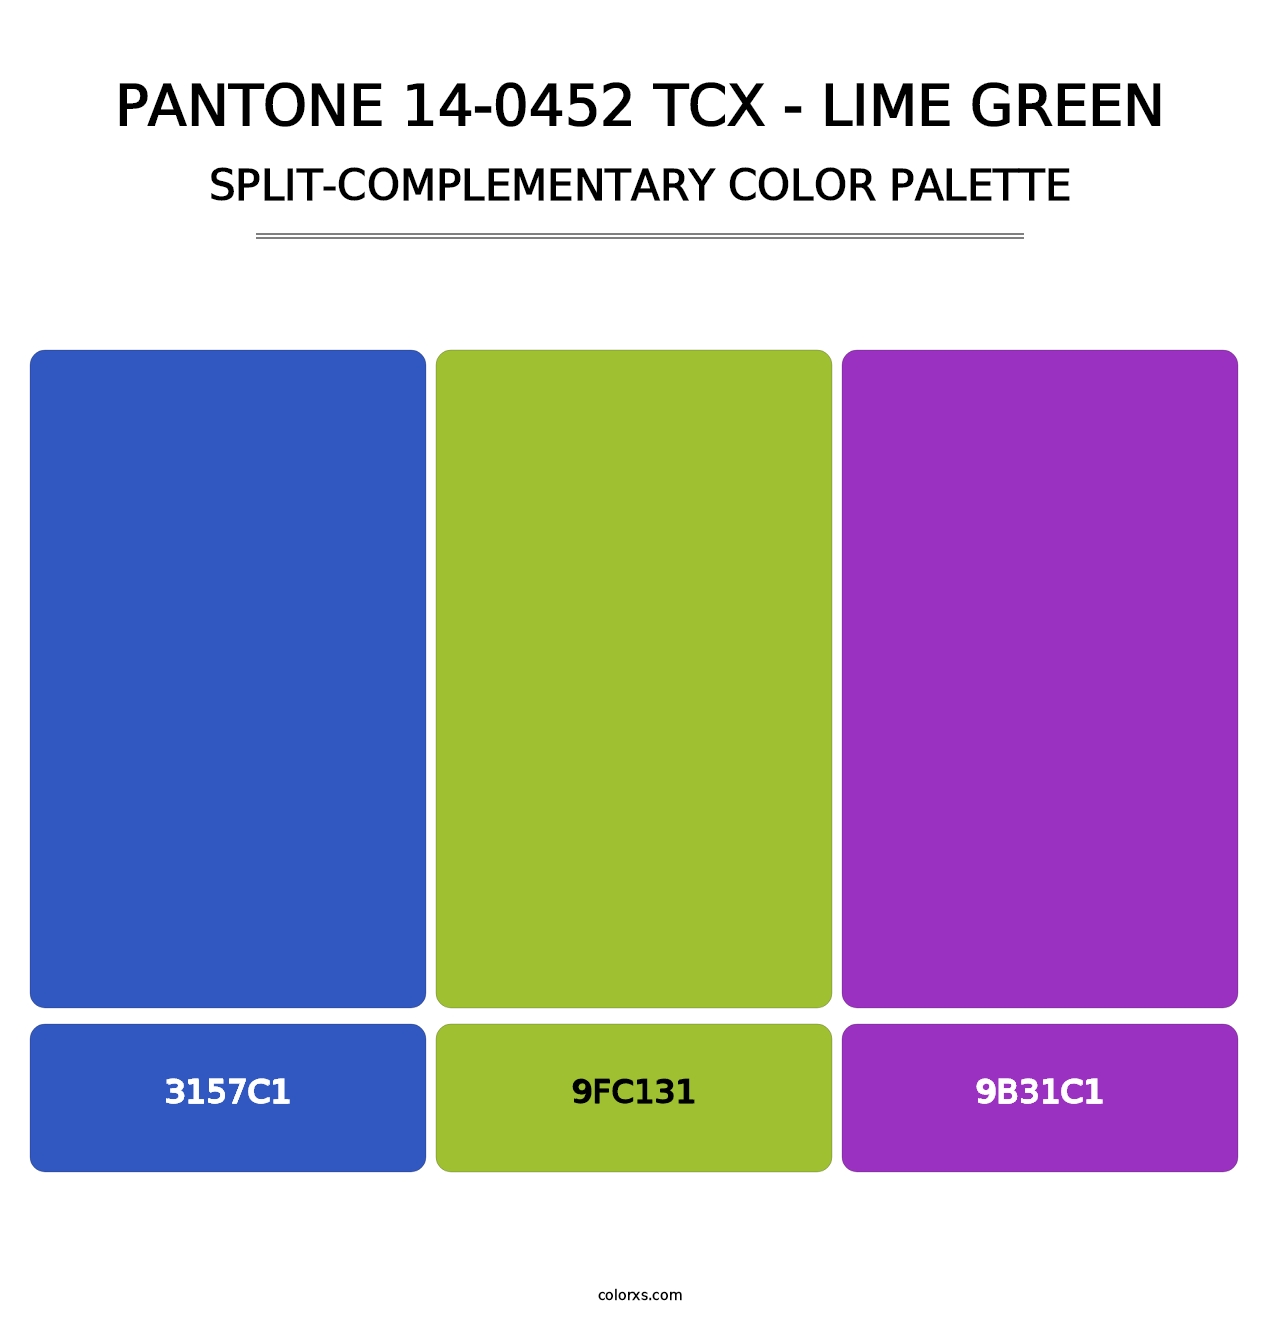 PANTONE 14-0452 TCX - Lime Green - Split-Complementary Color Palette